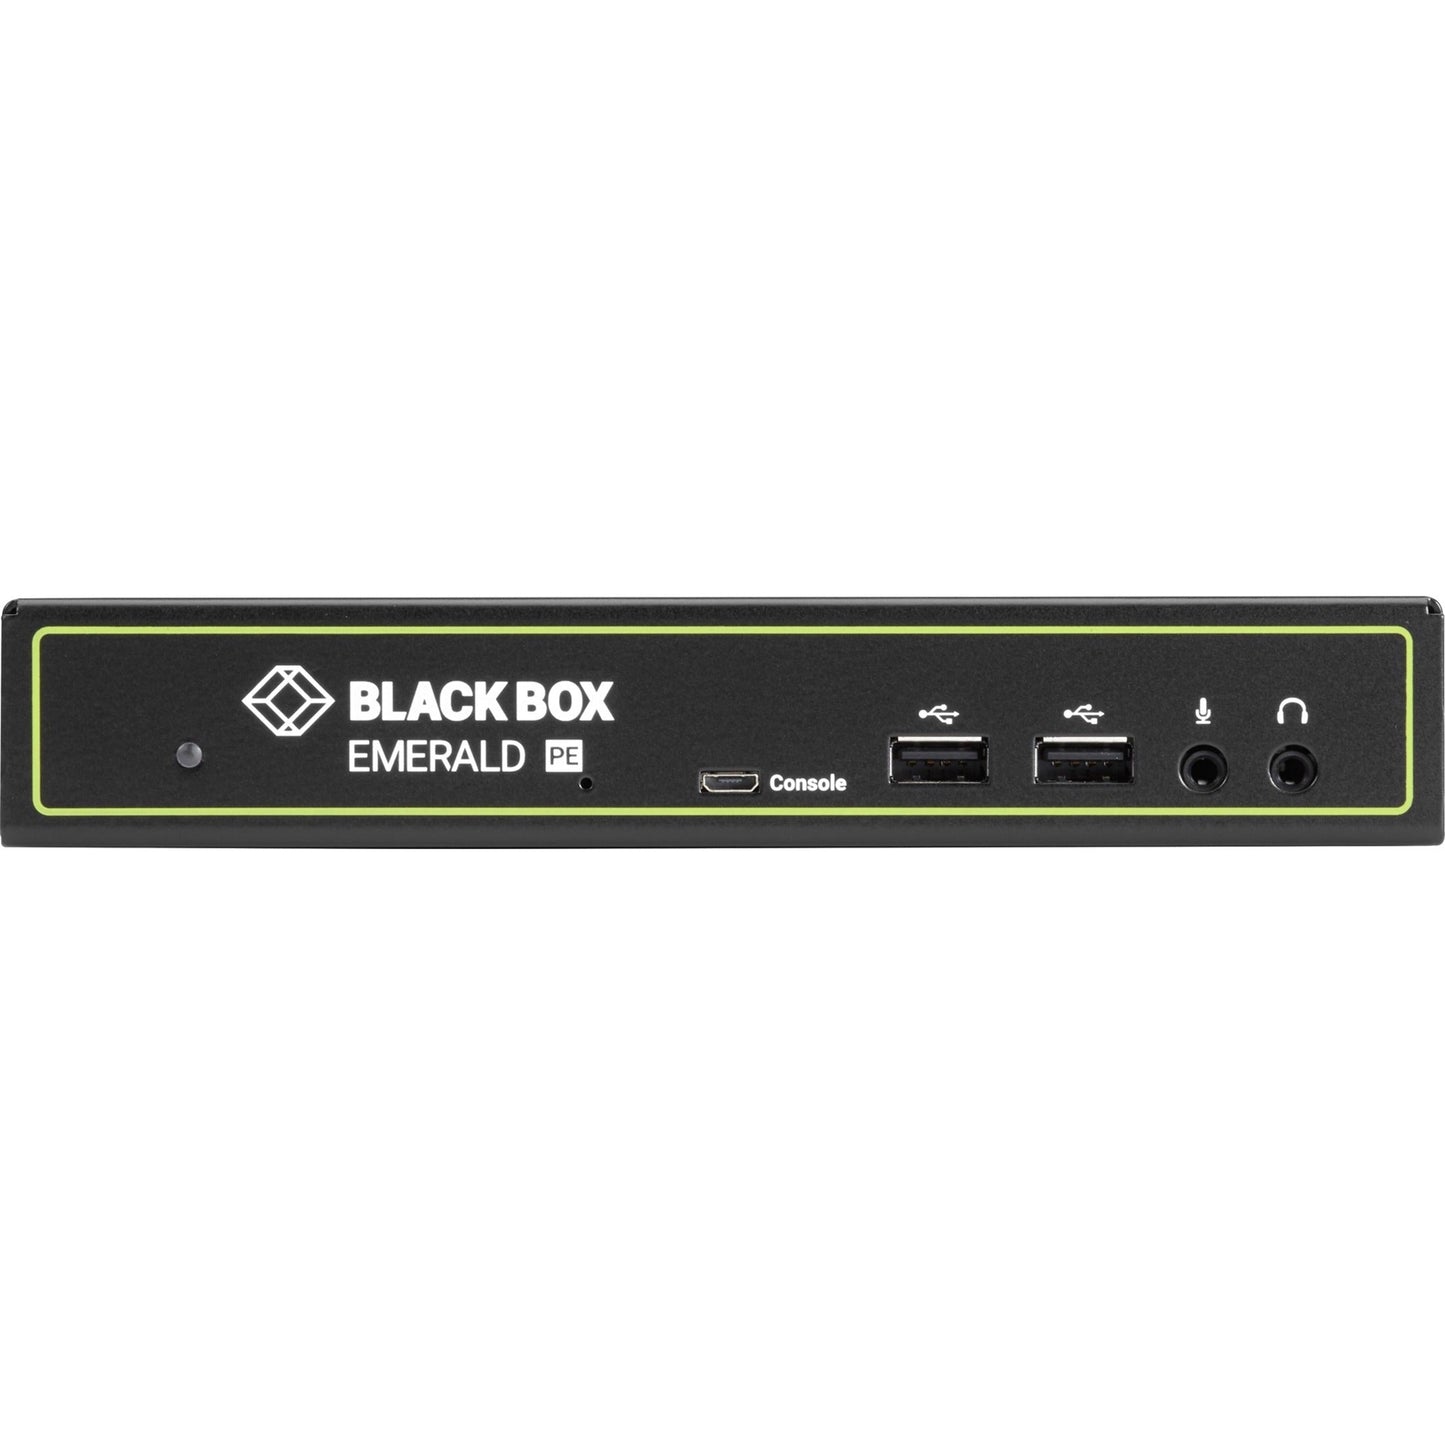 Black Box Emerald PE KVM Extender with Virtual Machine Access - DVI-D V-USB 2.0 Audio